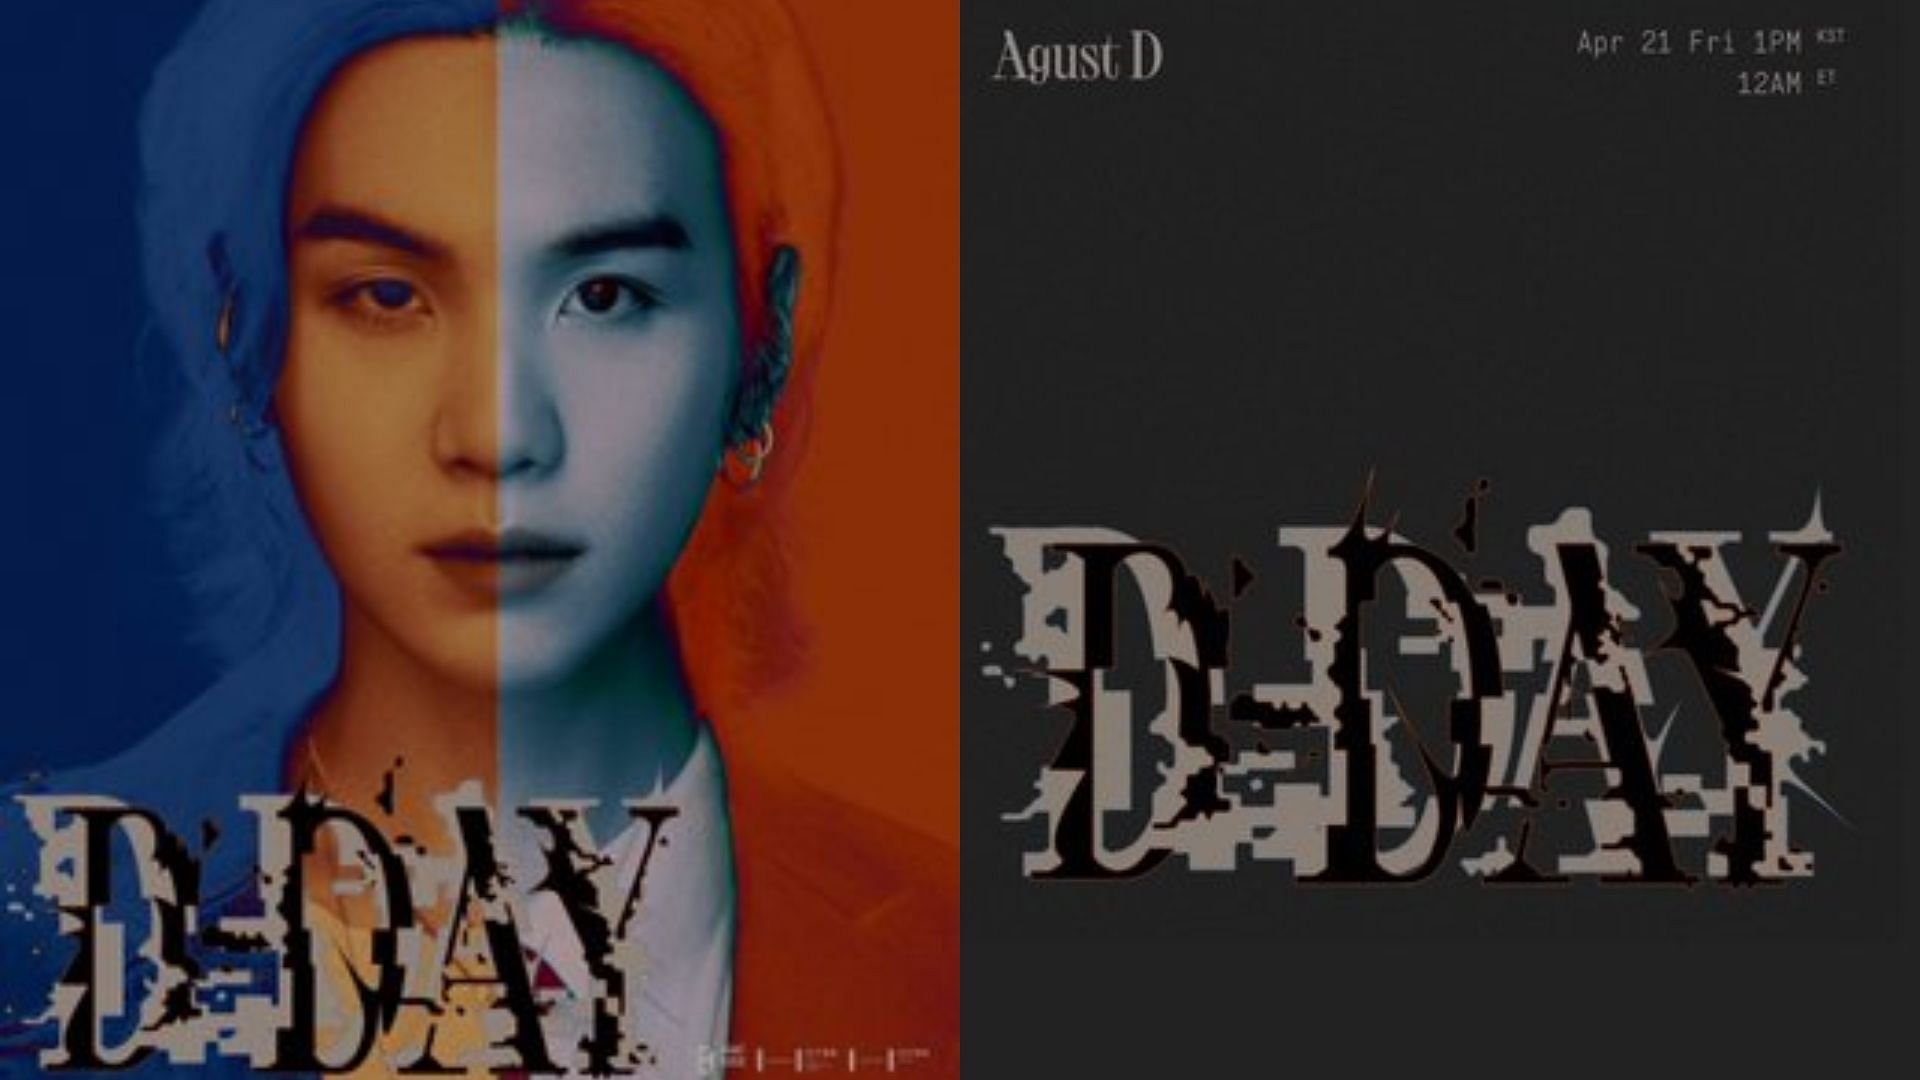 BTS’ SUGA reveals promotional schedule for solo album DDAY